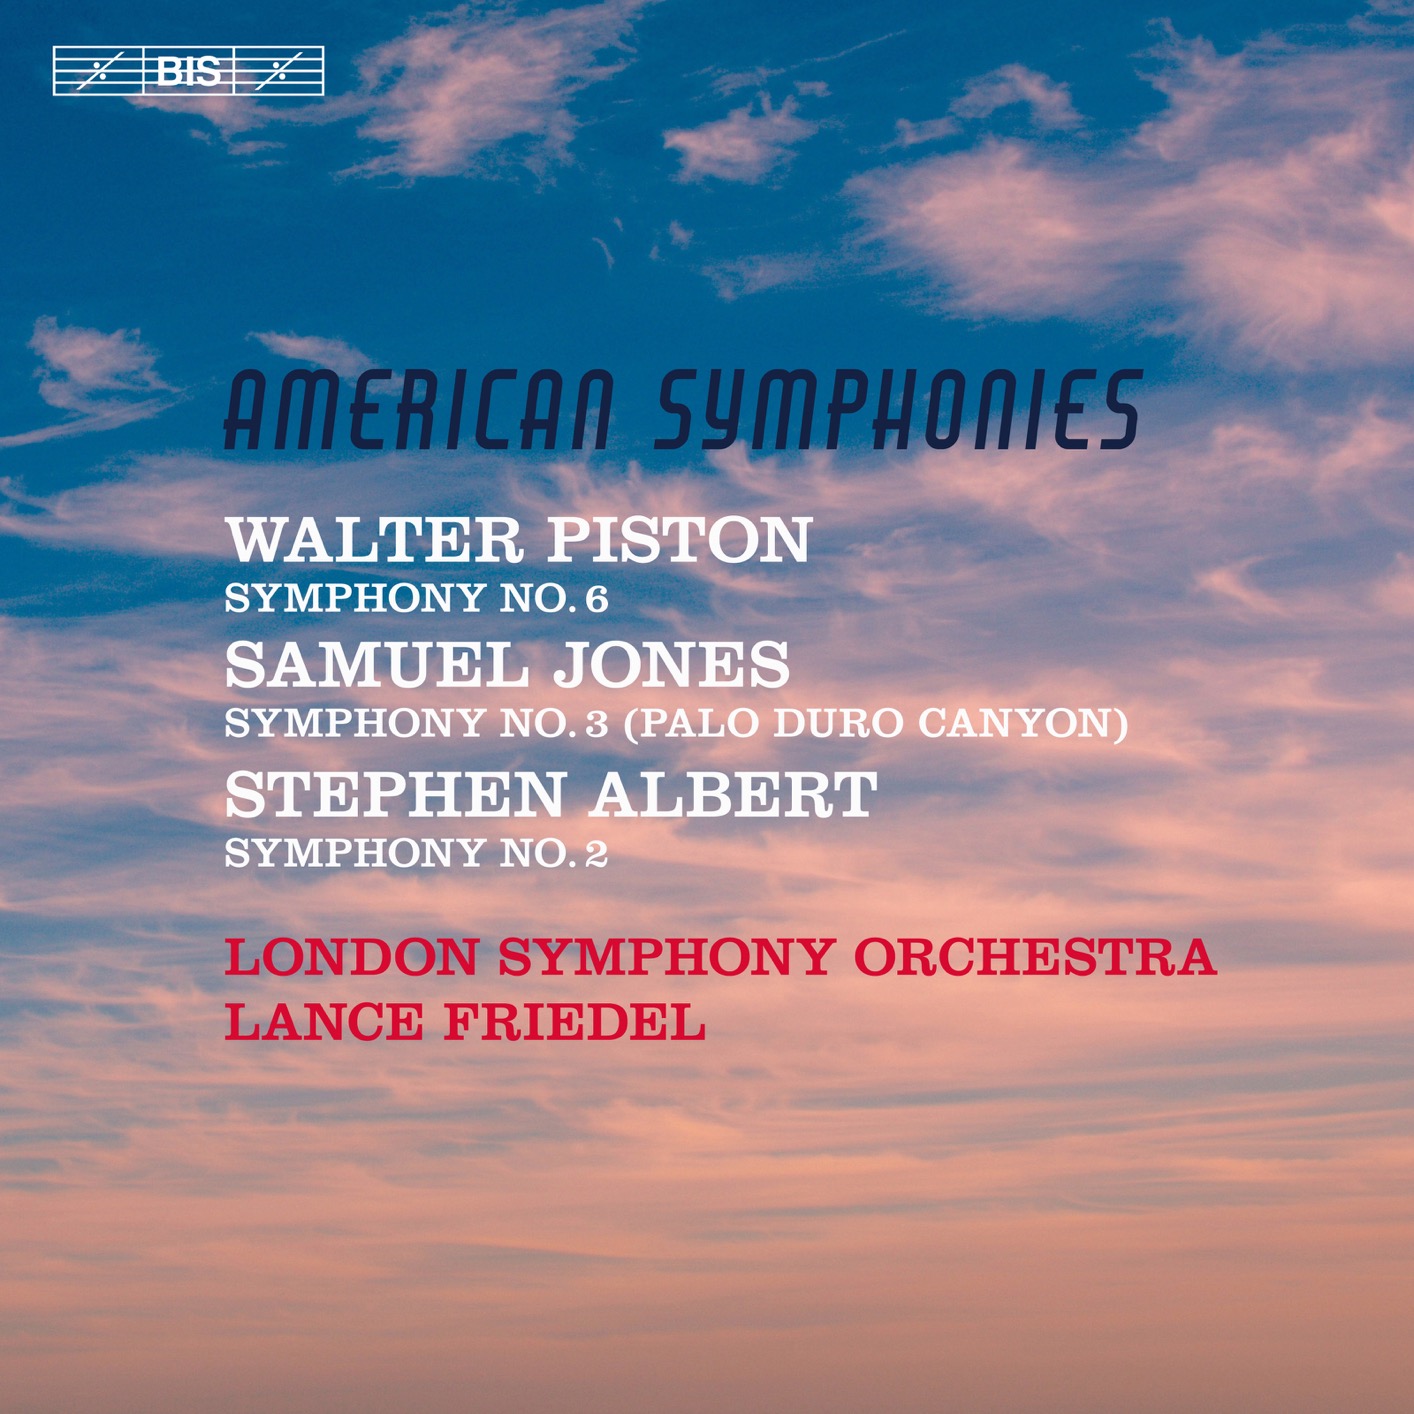 London Symphony Orchestra & Lance Friedel - American Symphonies (2018) [FLAC 24bit/96kHz]